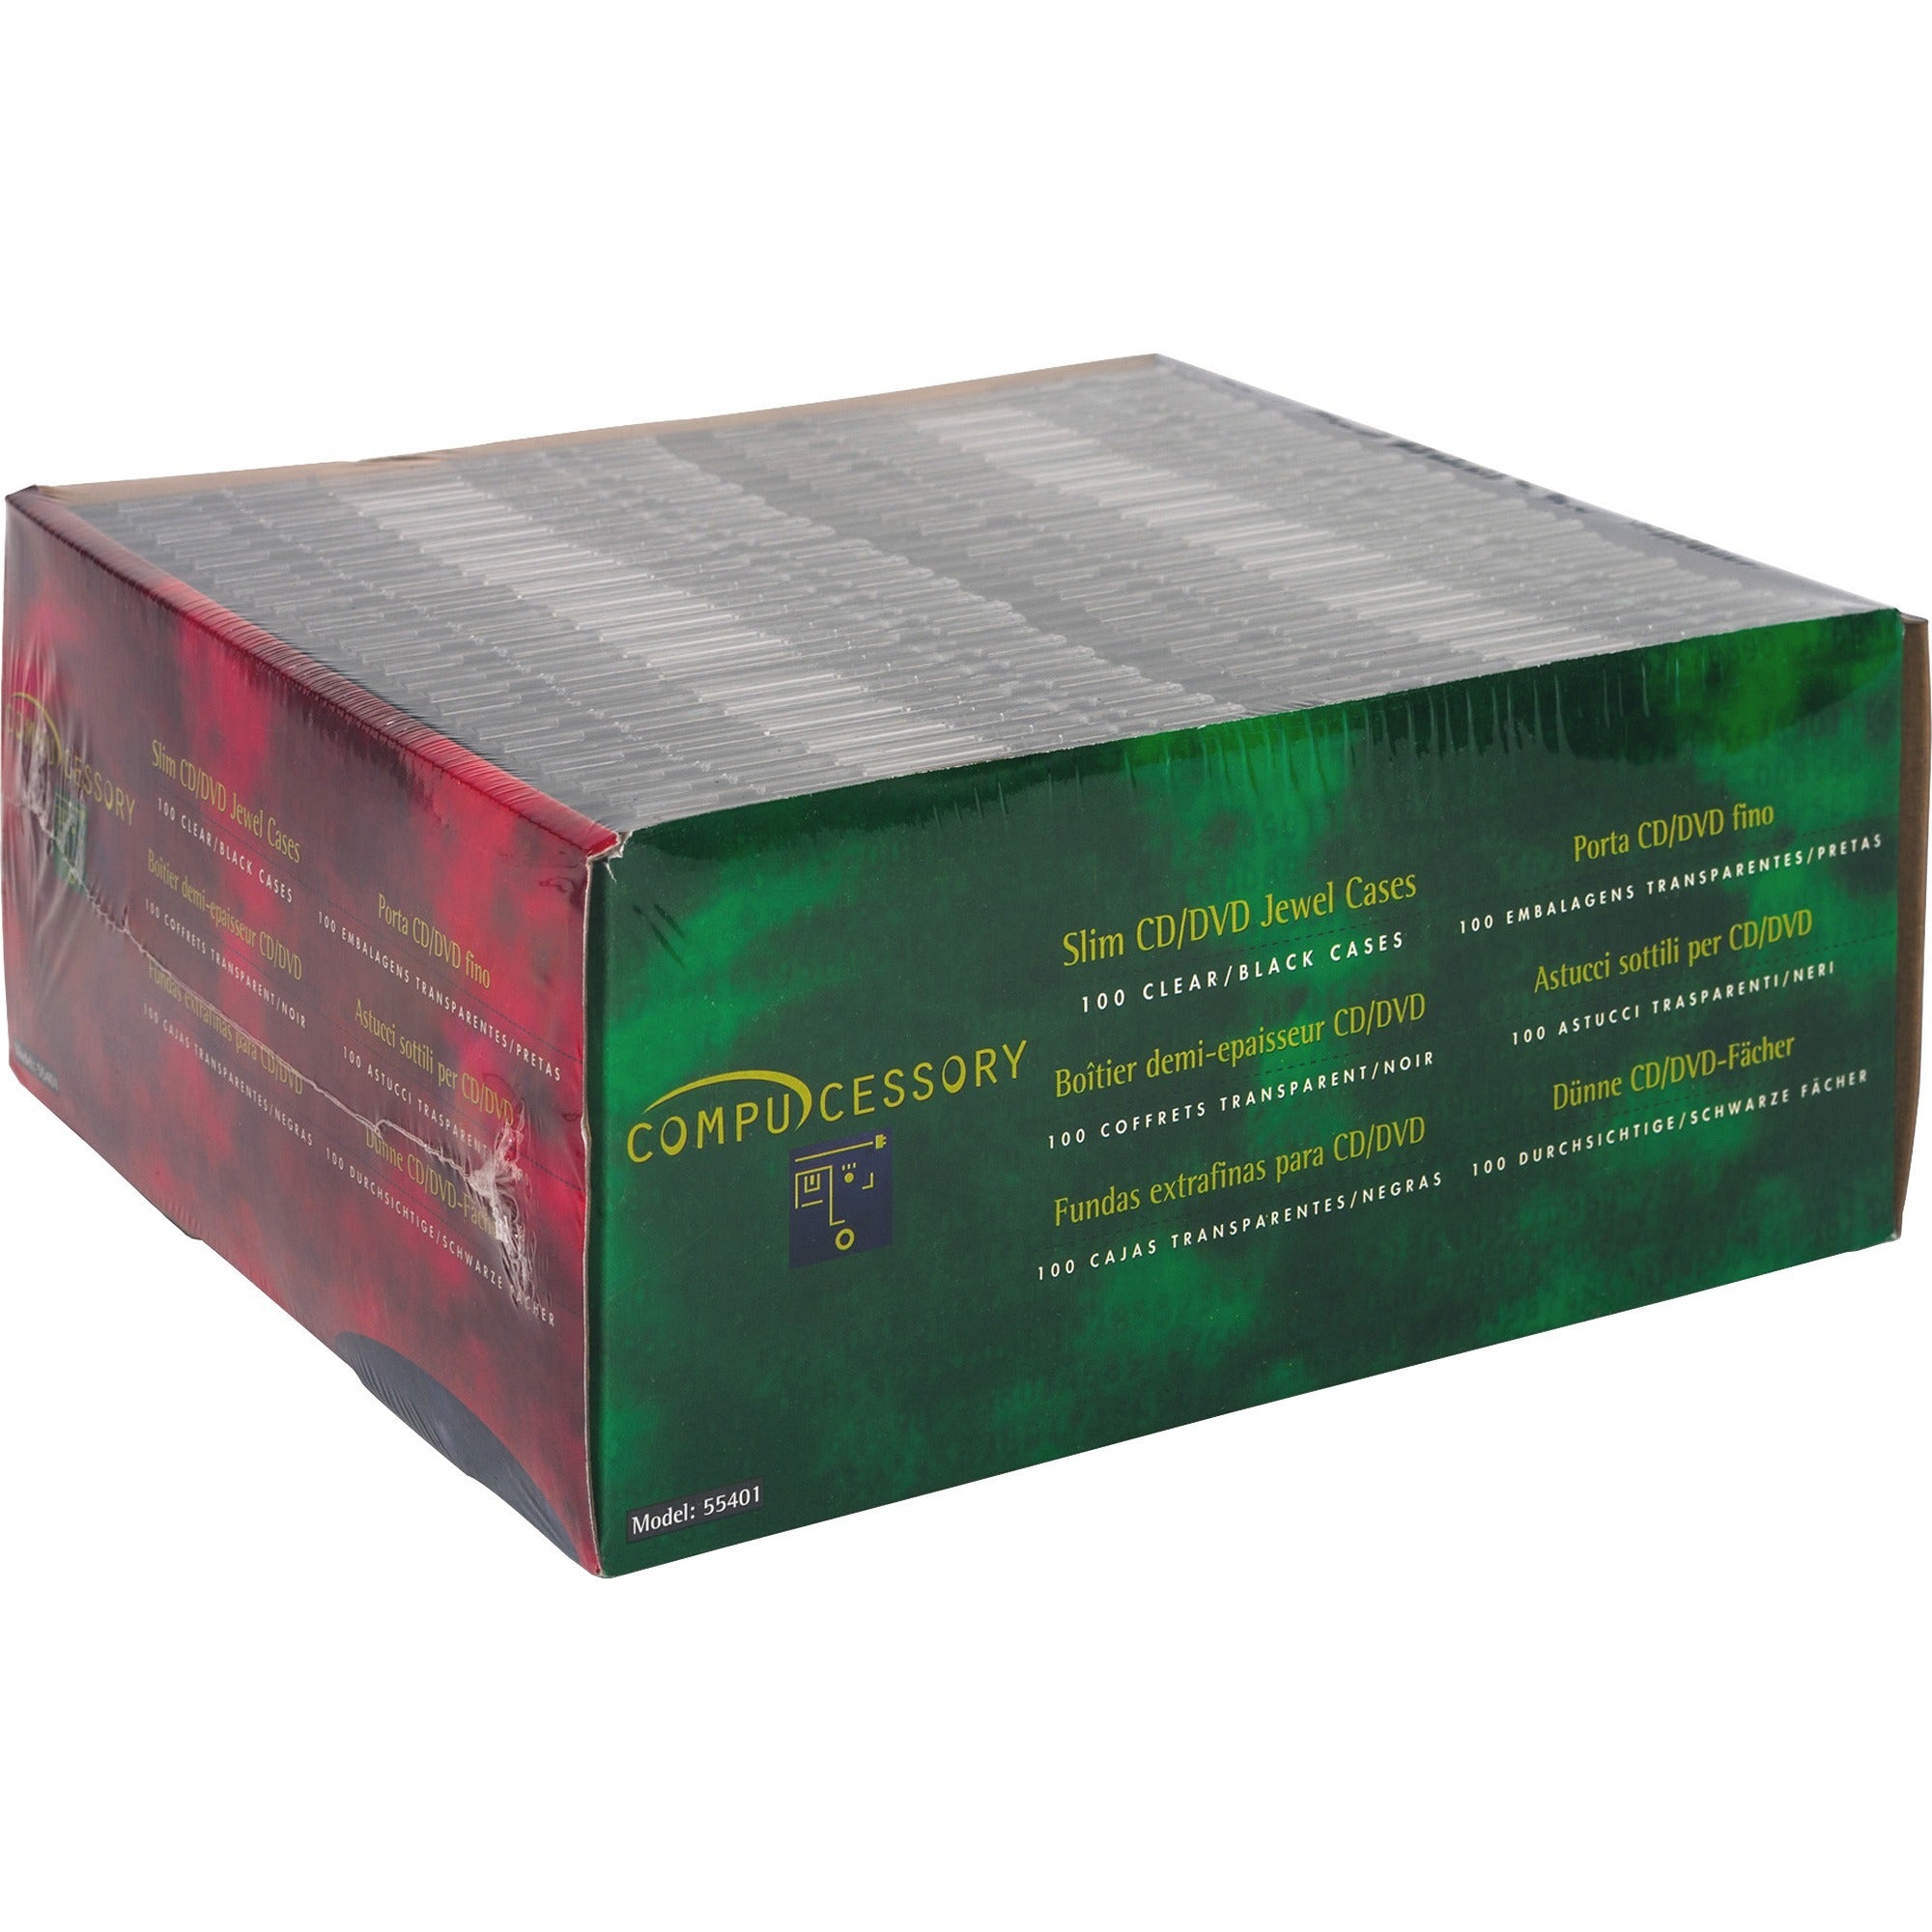 Compucessory Slim CD/DVD Jewel Cases - Jewel Case - Black - 1 CD/DVD - 